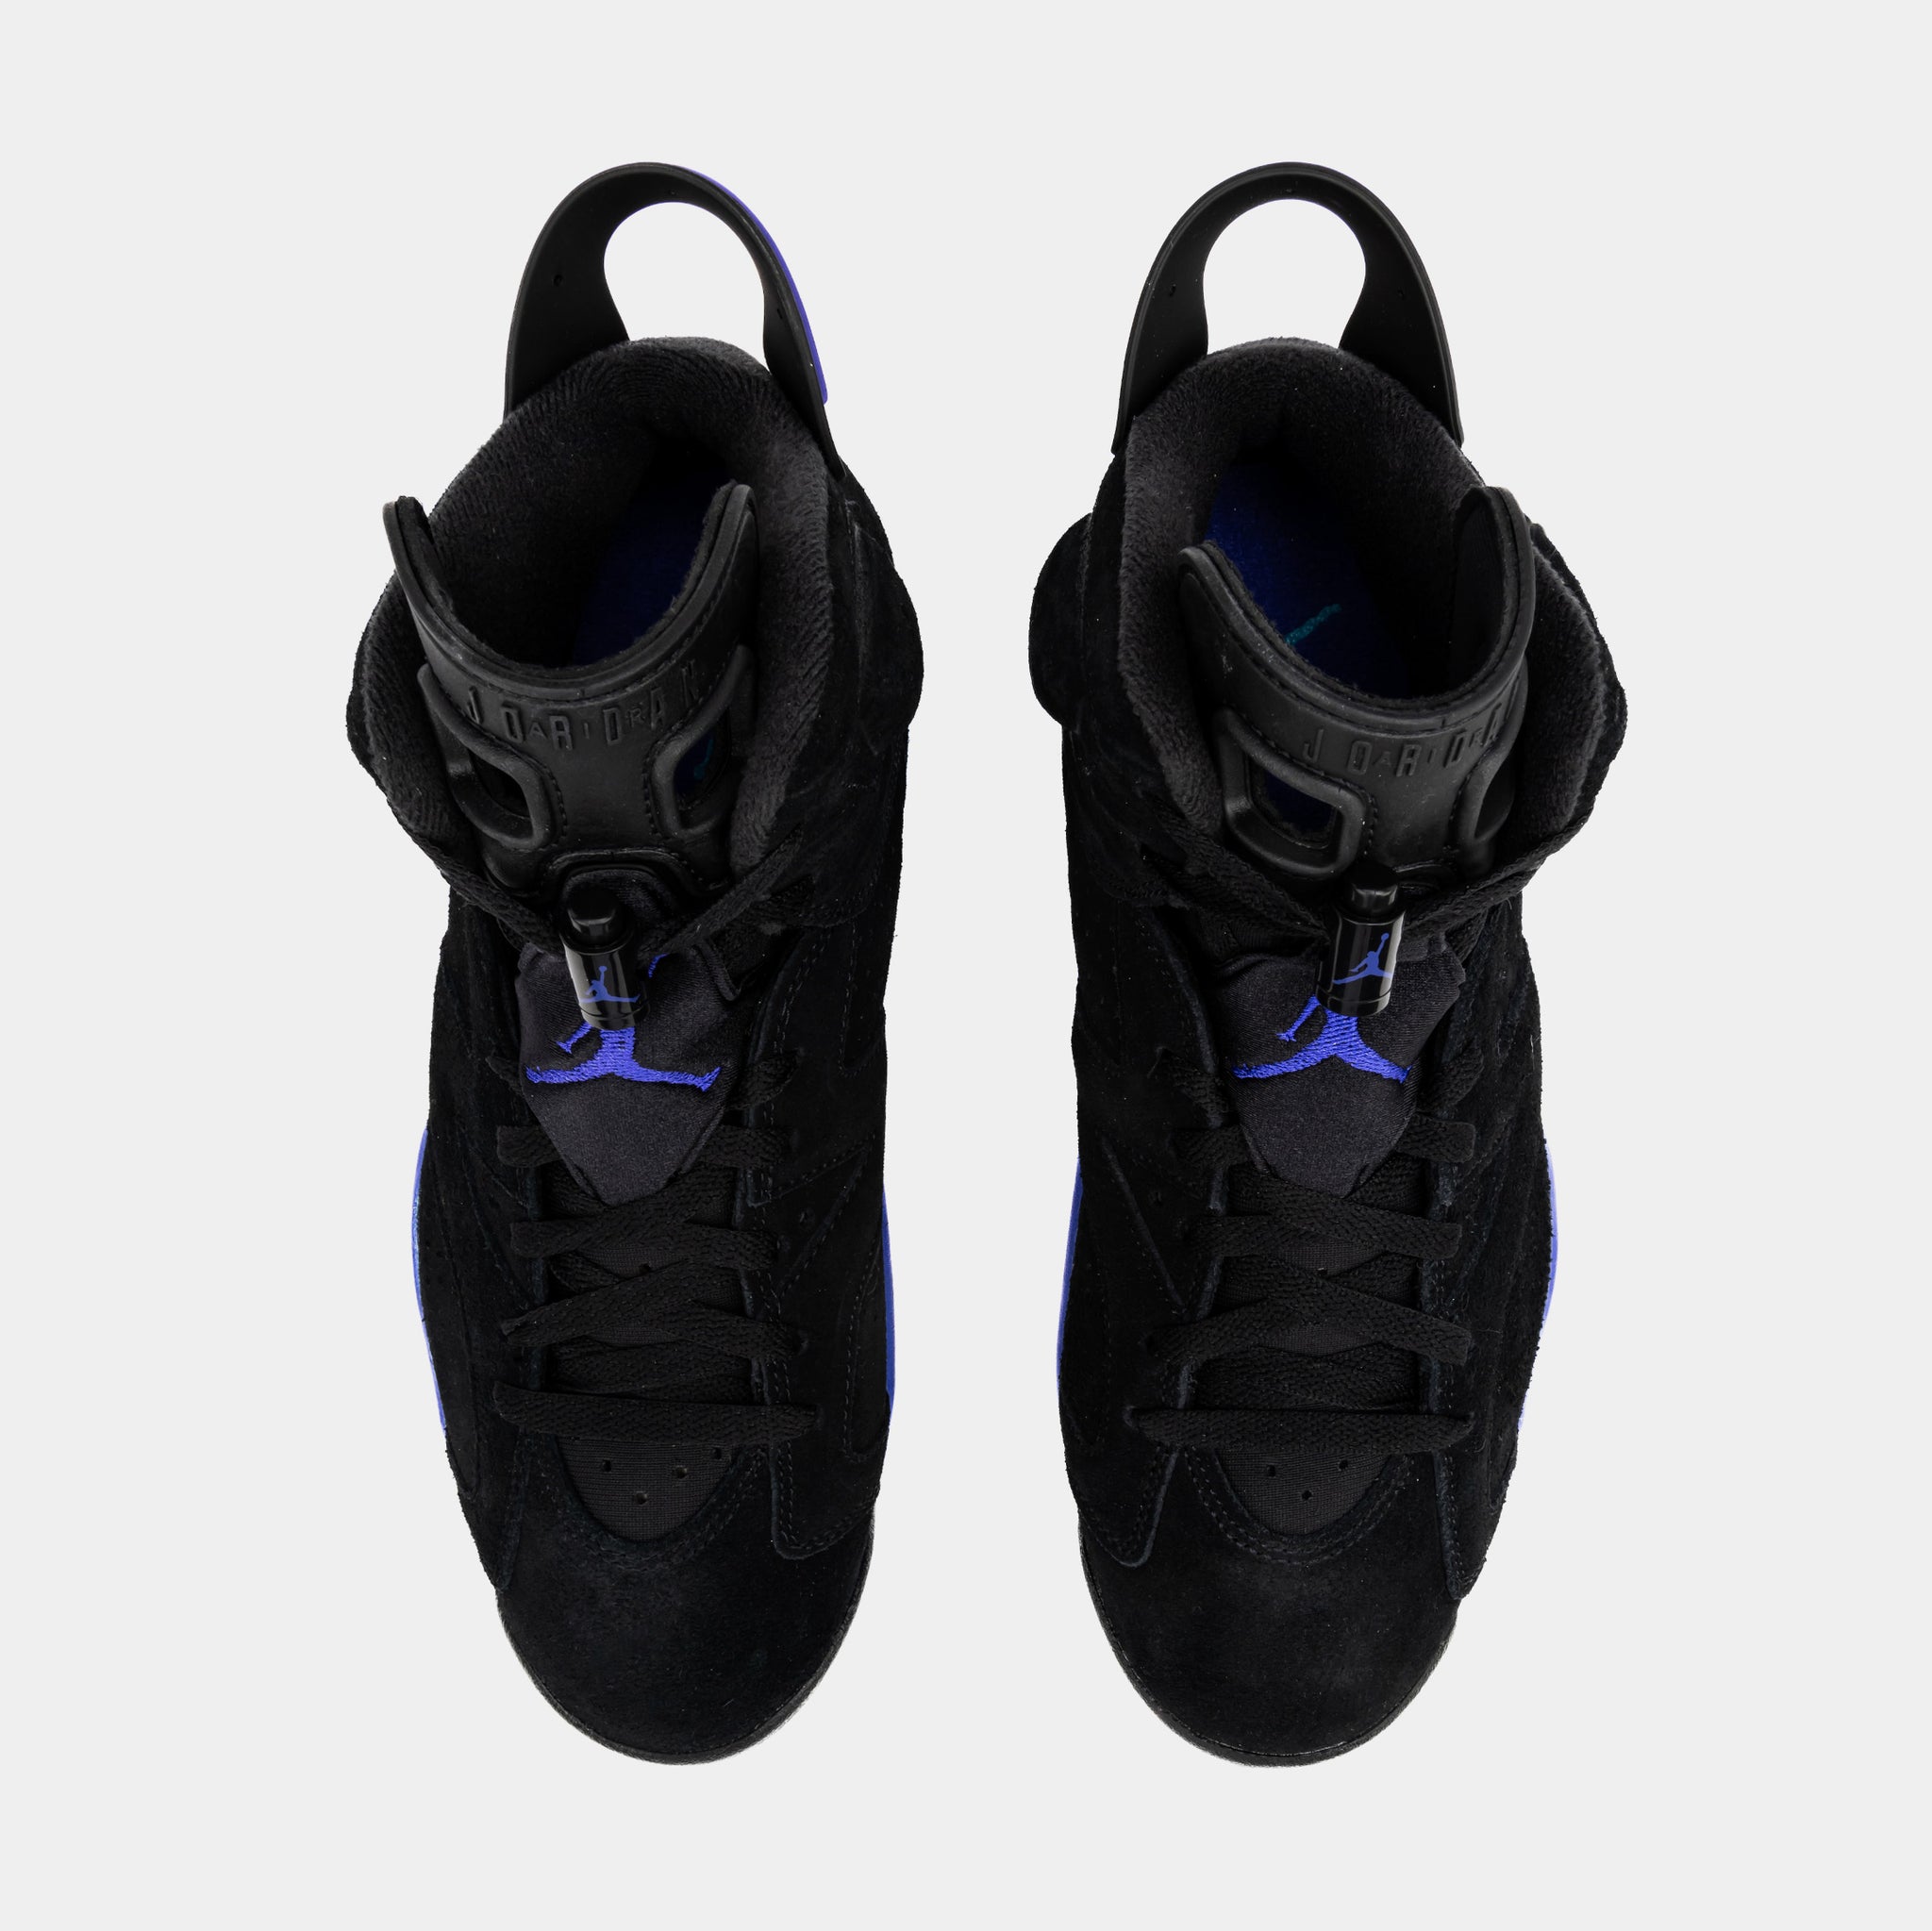 Air Jordan 6 Retro Aqua Mens Lifestyle Shoes (Black/Aquatone/Bright Concord)